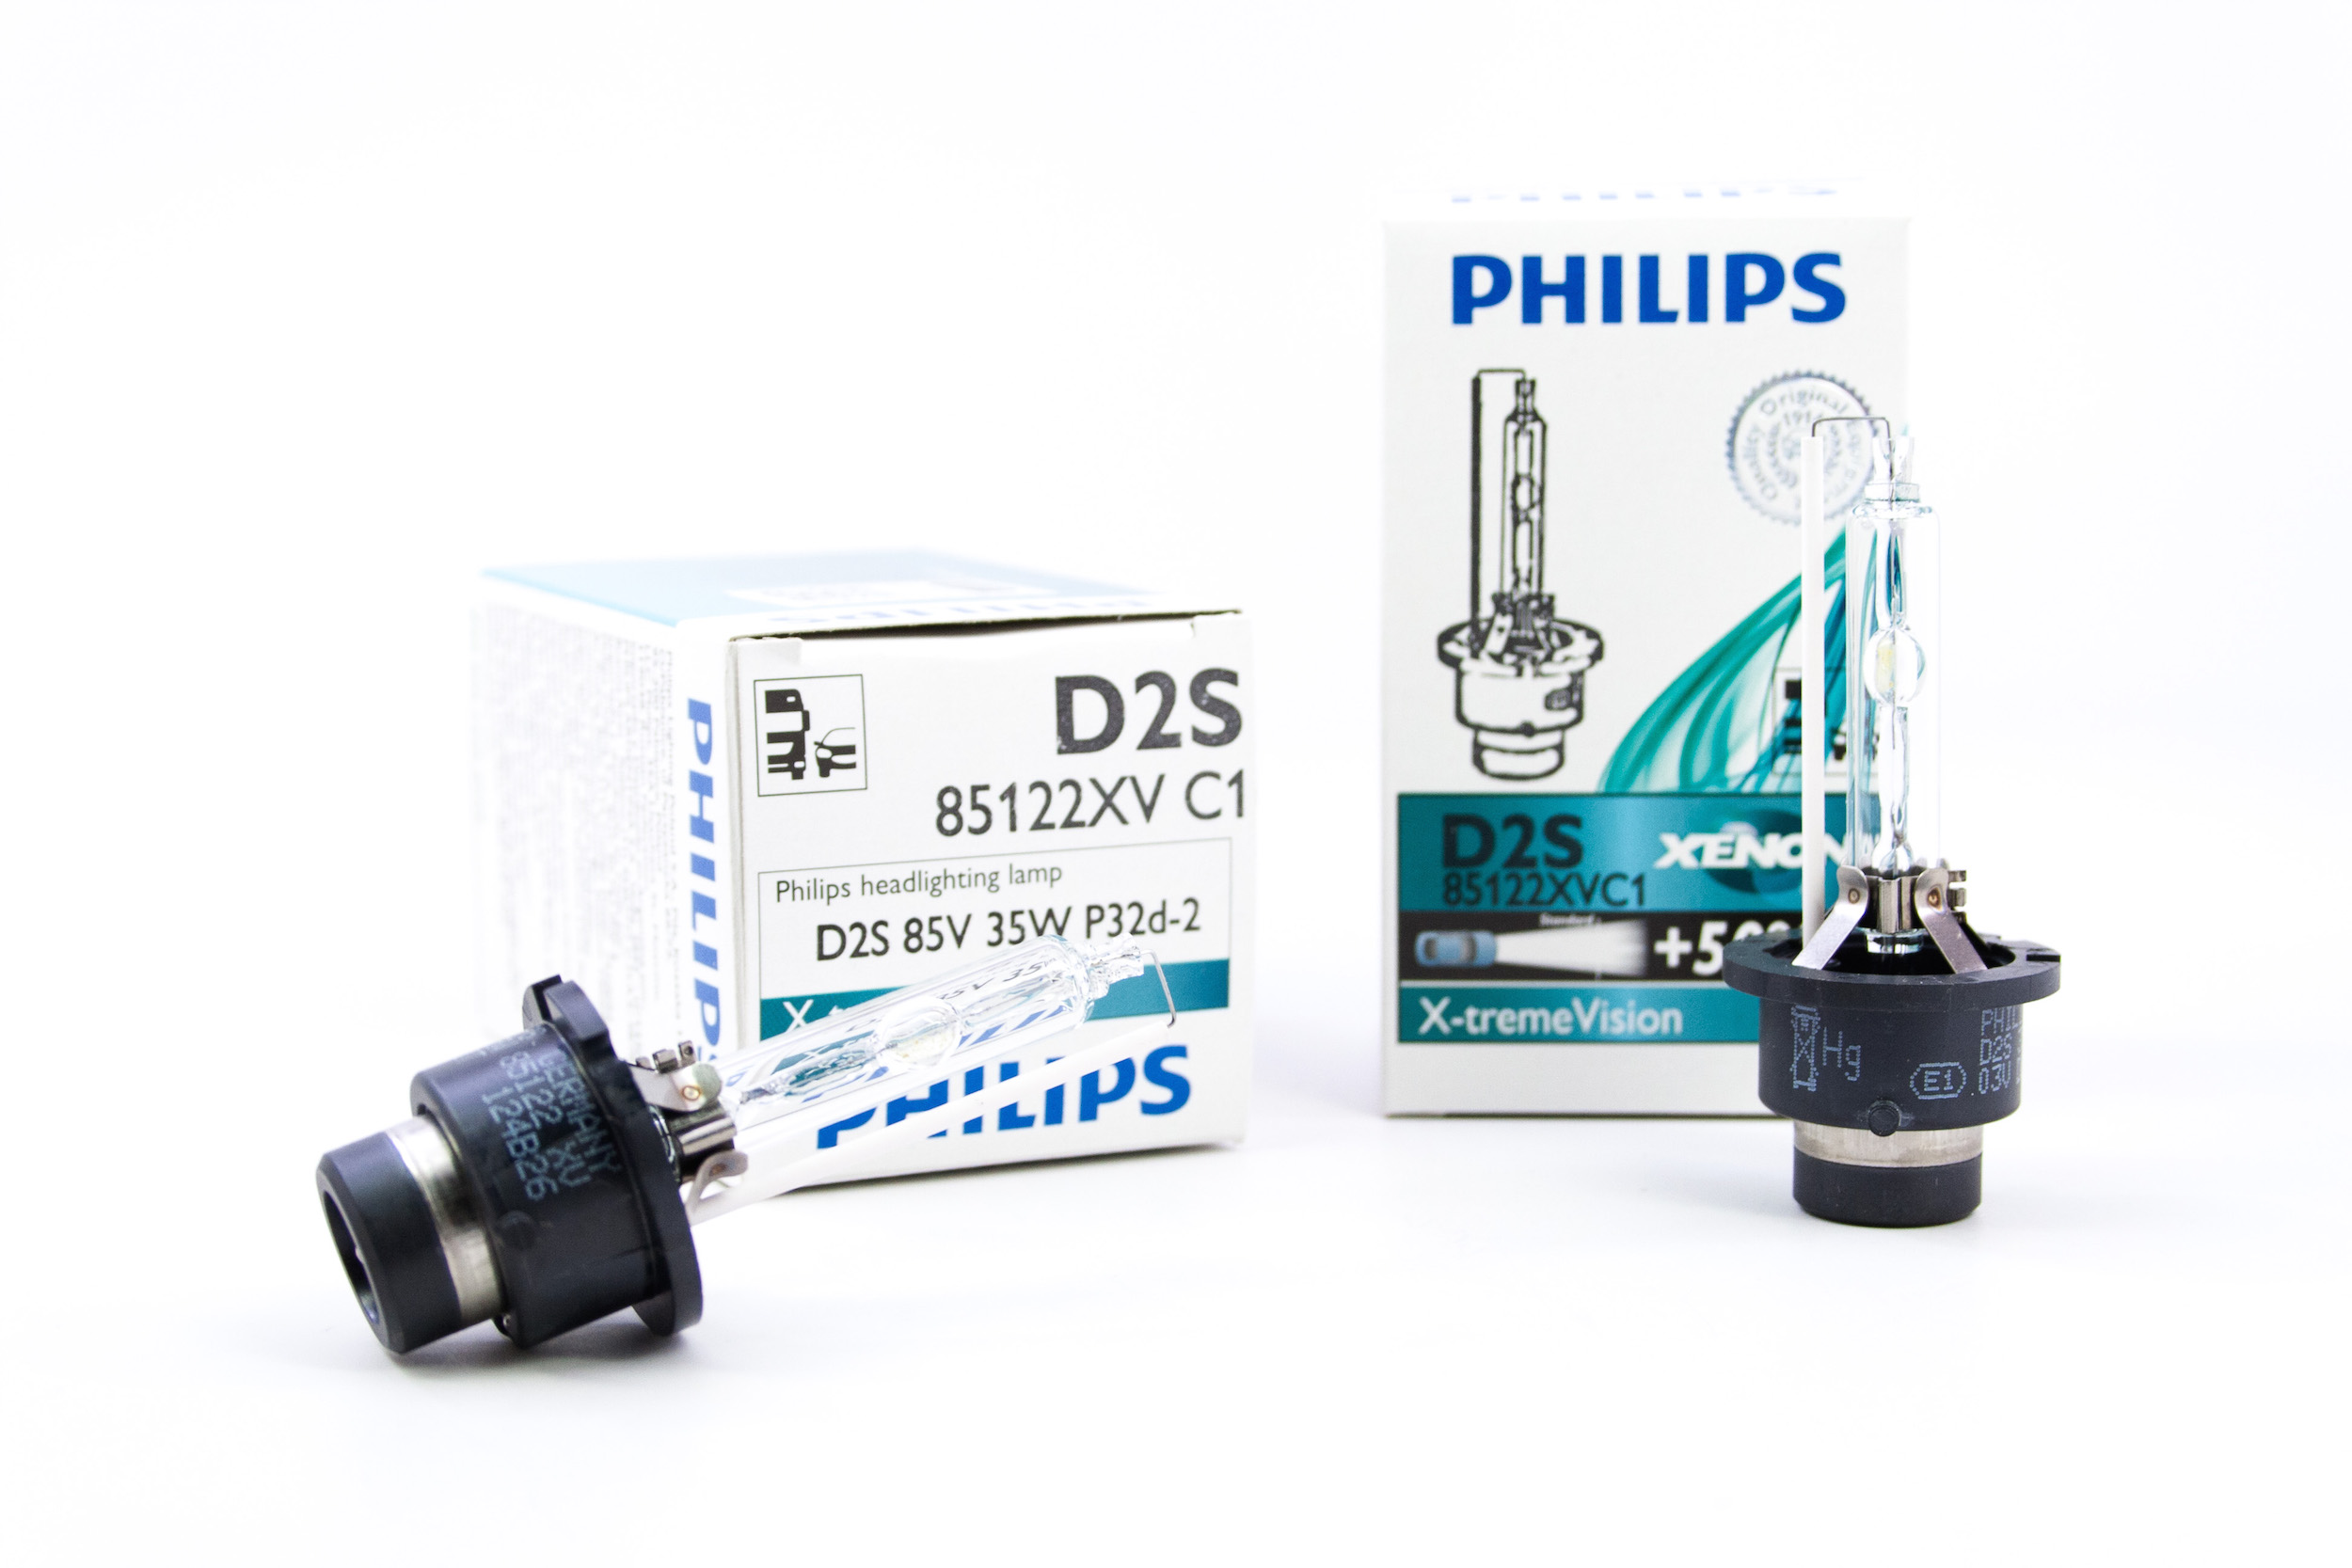 D2S: Philips 85122 XV2 C1 X-TremeVision (4800k)